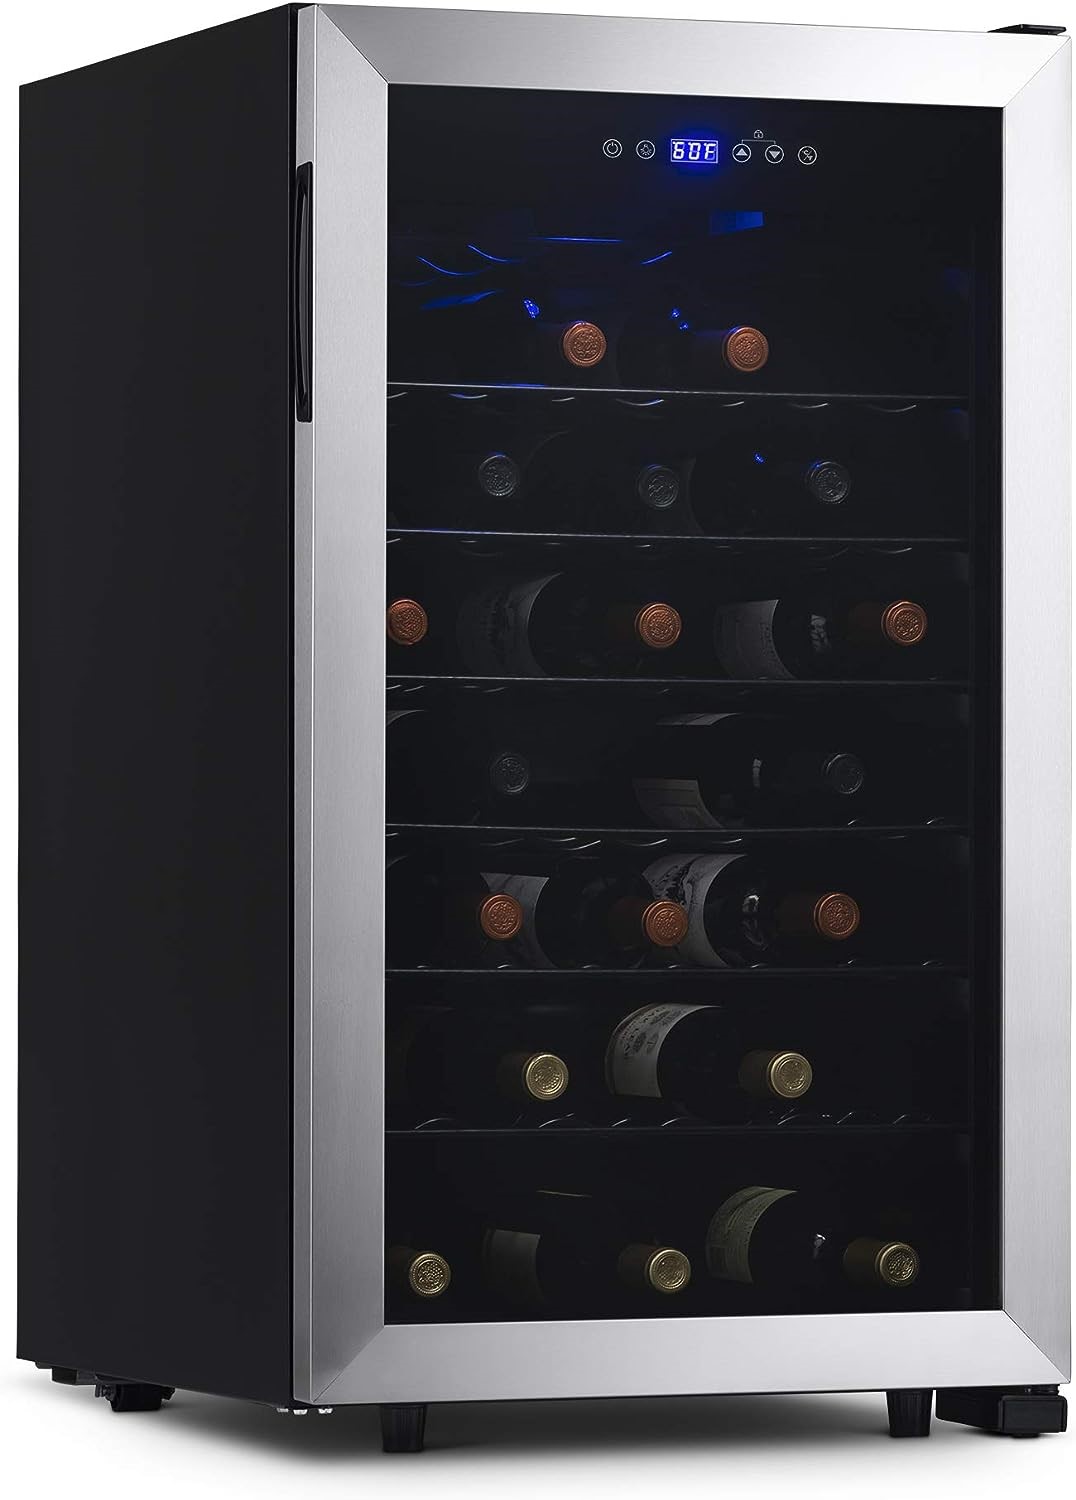 NewAir Large Capacity Wine Fridge | DeviceDaily.com